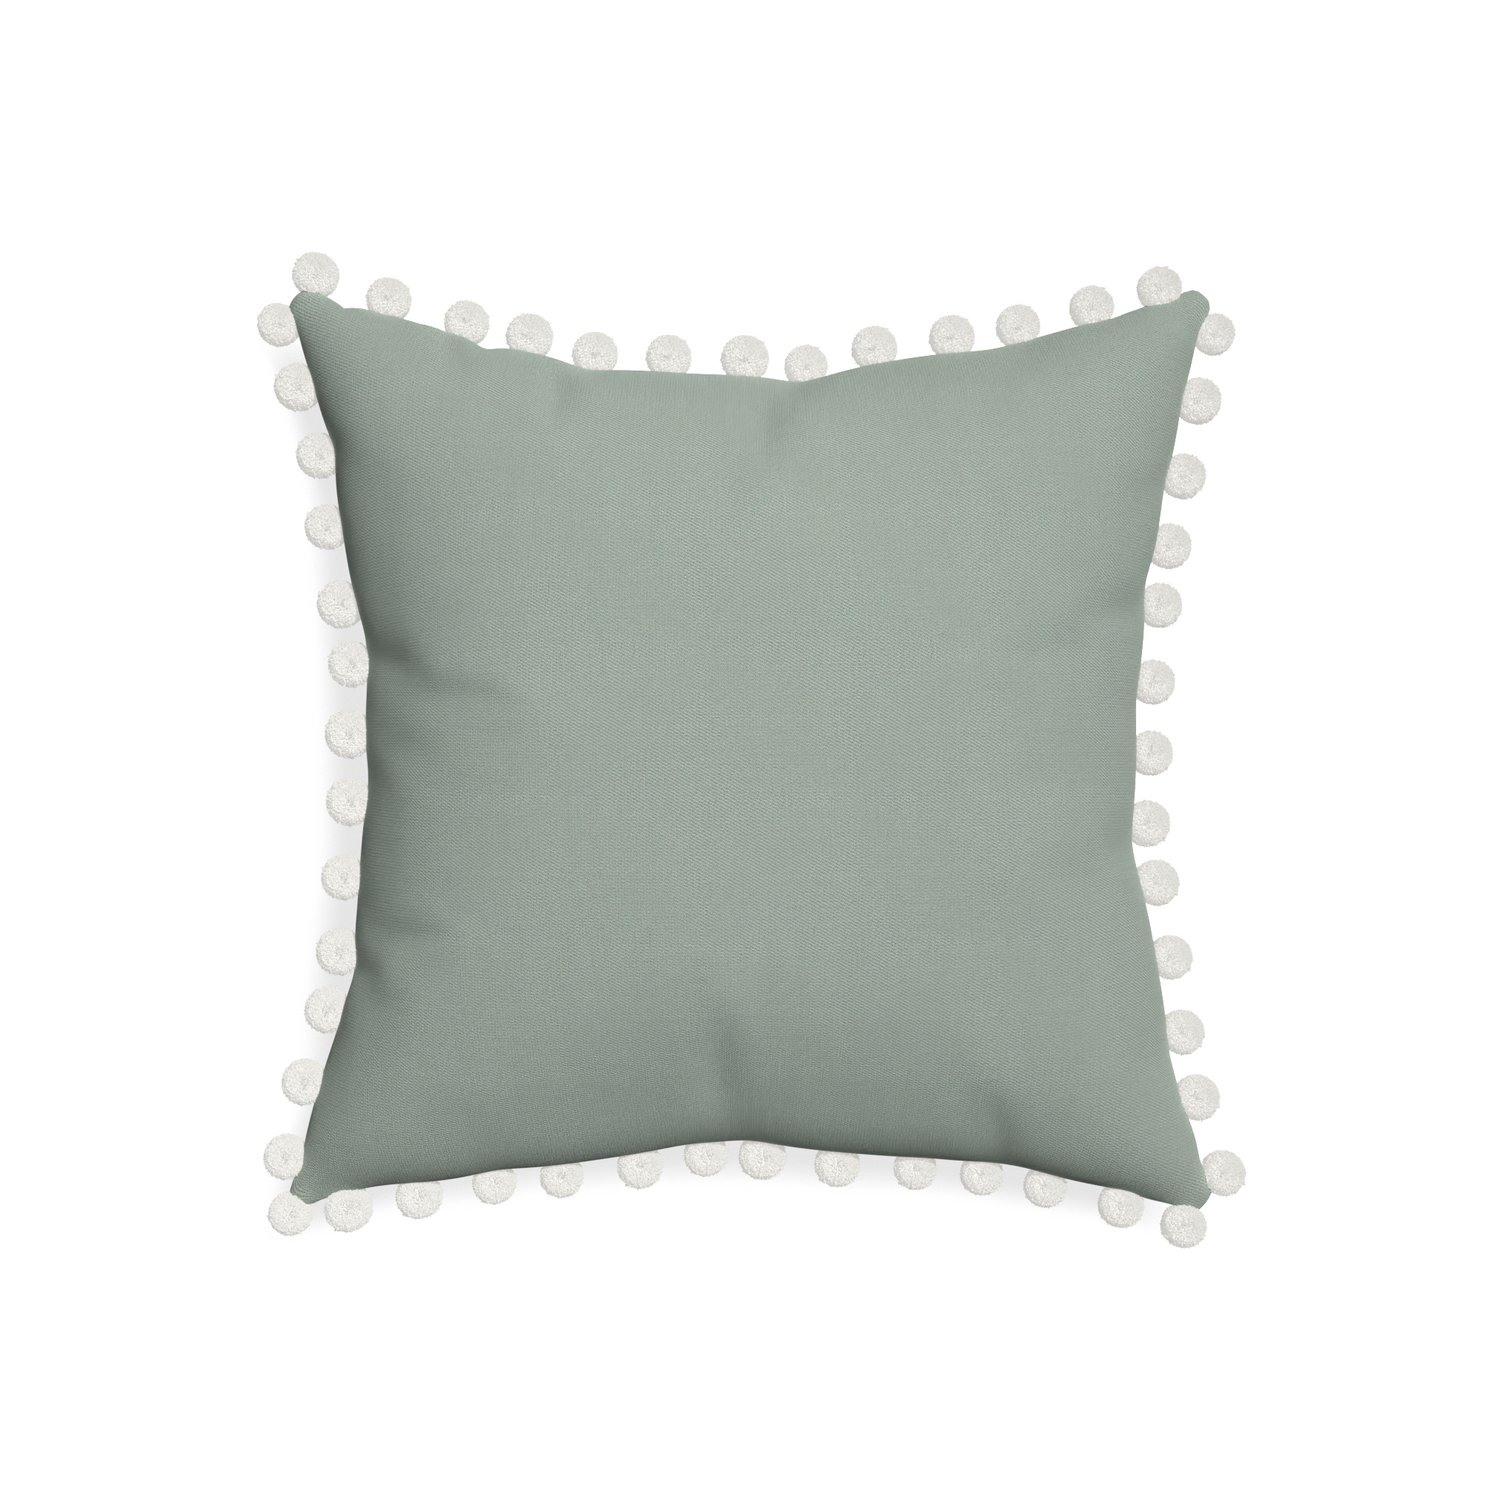 20-square sage custom pillow with snow pom pom on white background